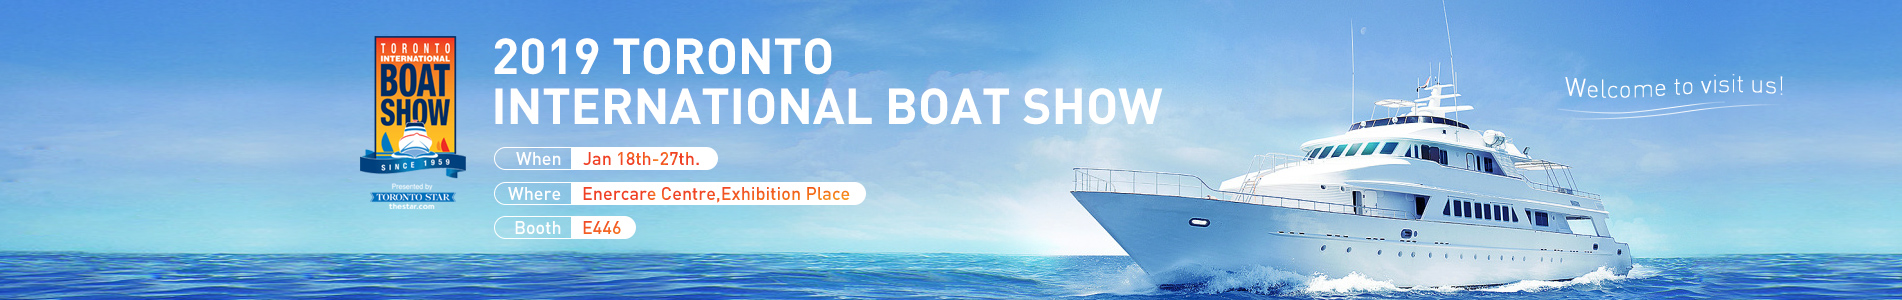 SEAFLO team will attend 2019 Toronto International Boat Show 